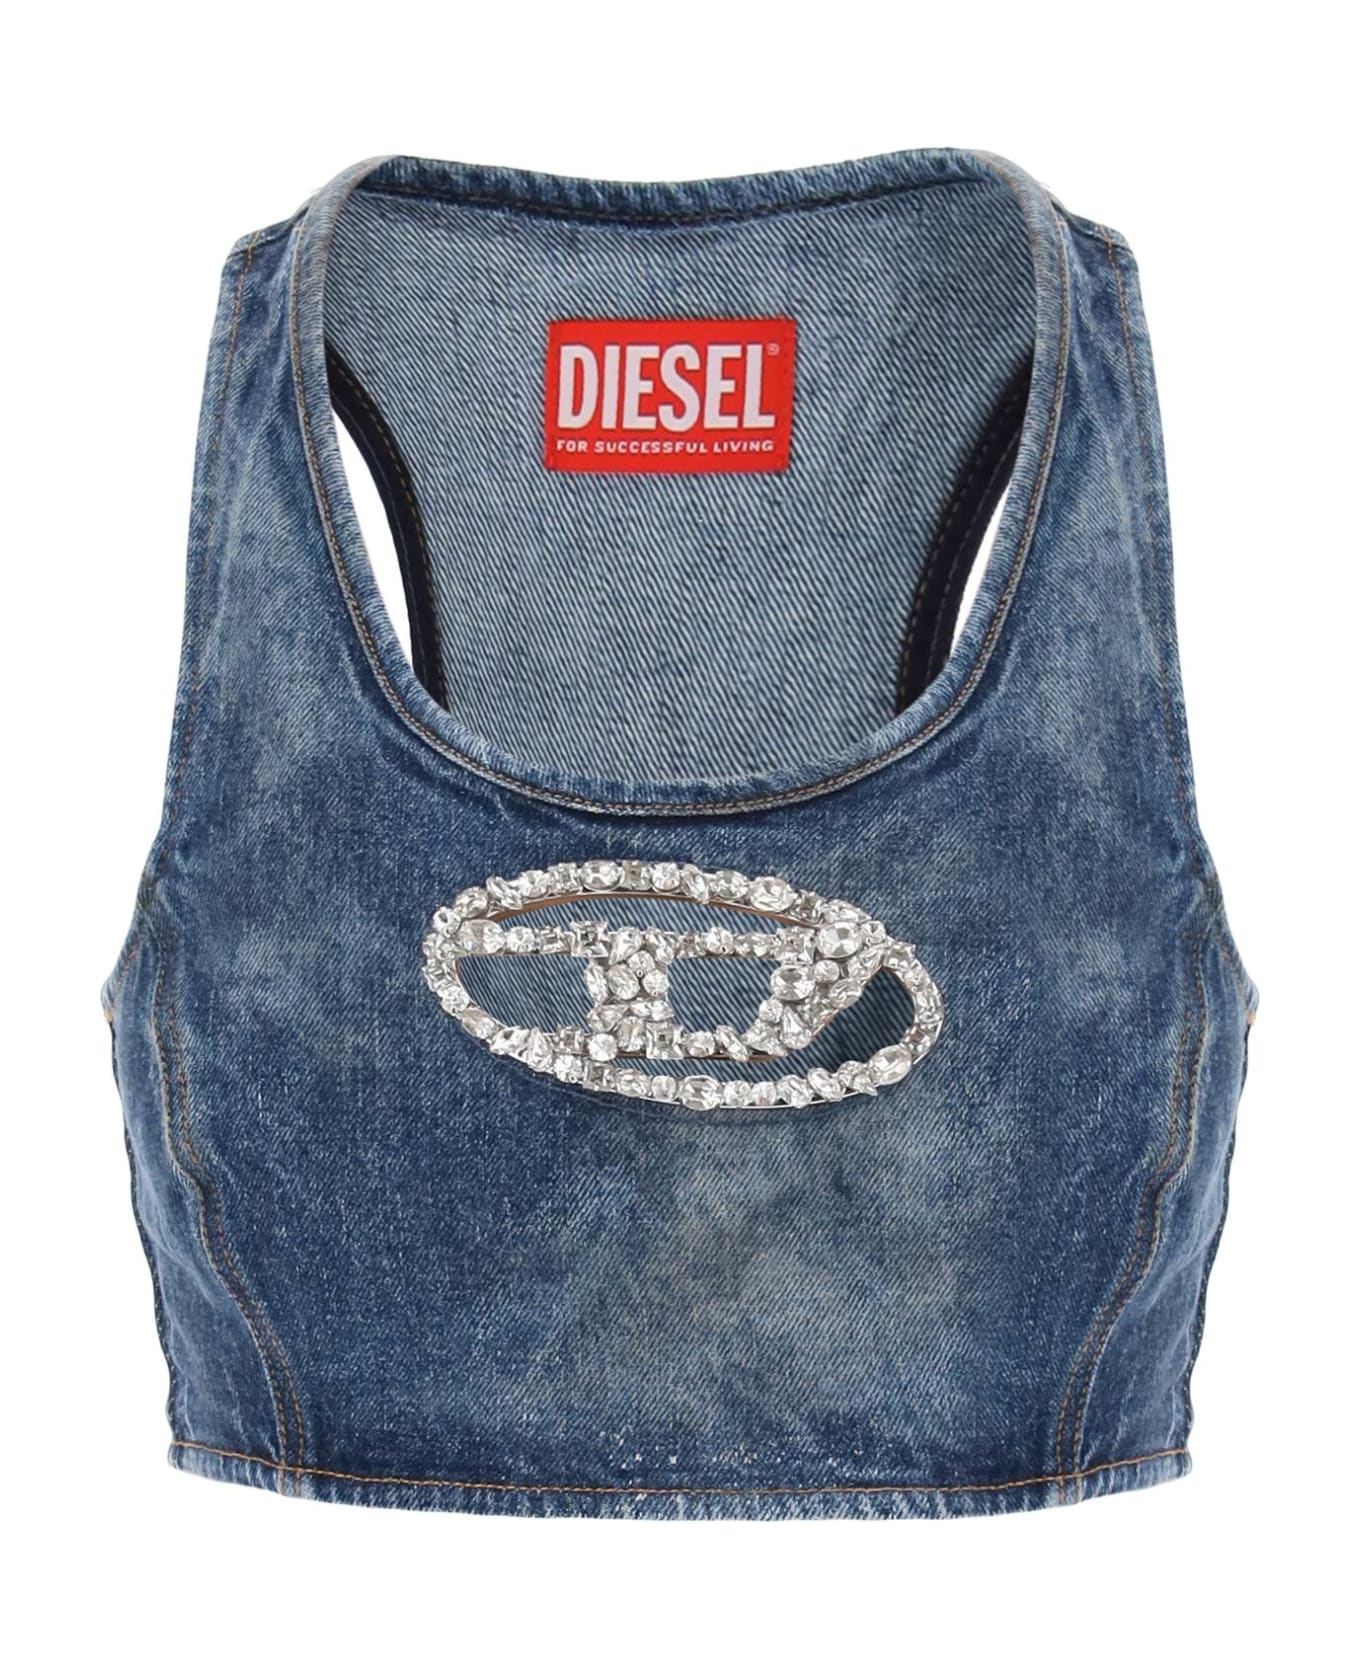 Diesel Denim Crop Top With Jewel Buckle - DENIM (Blue)